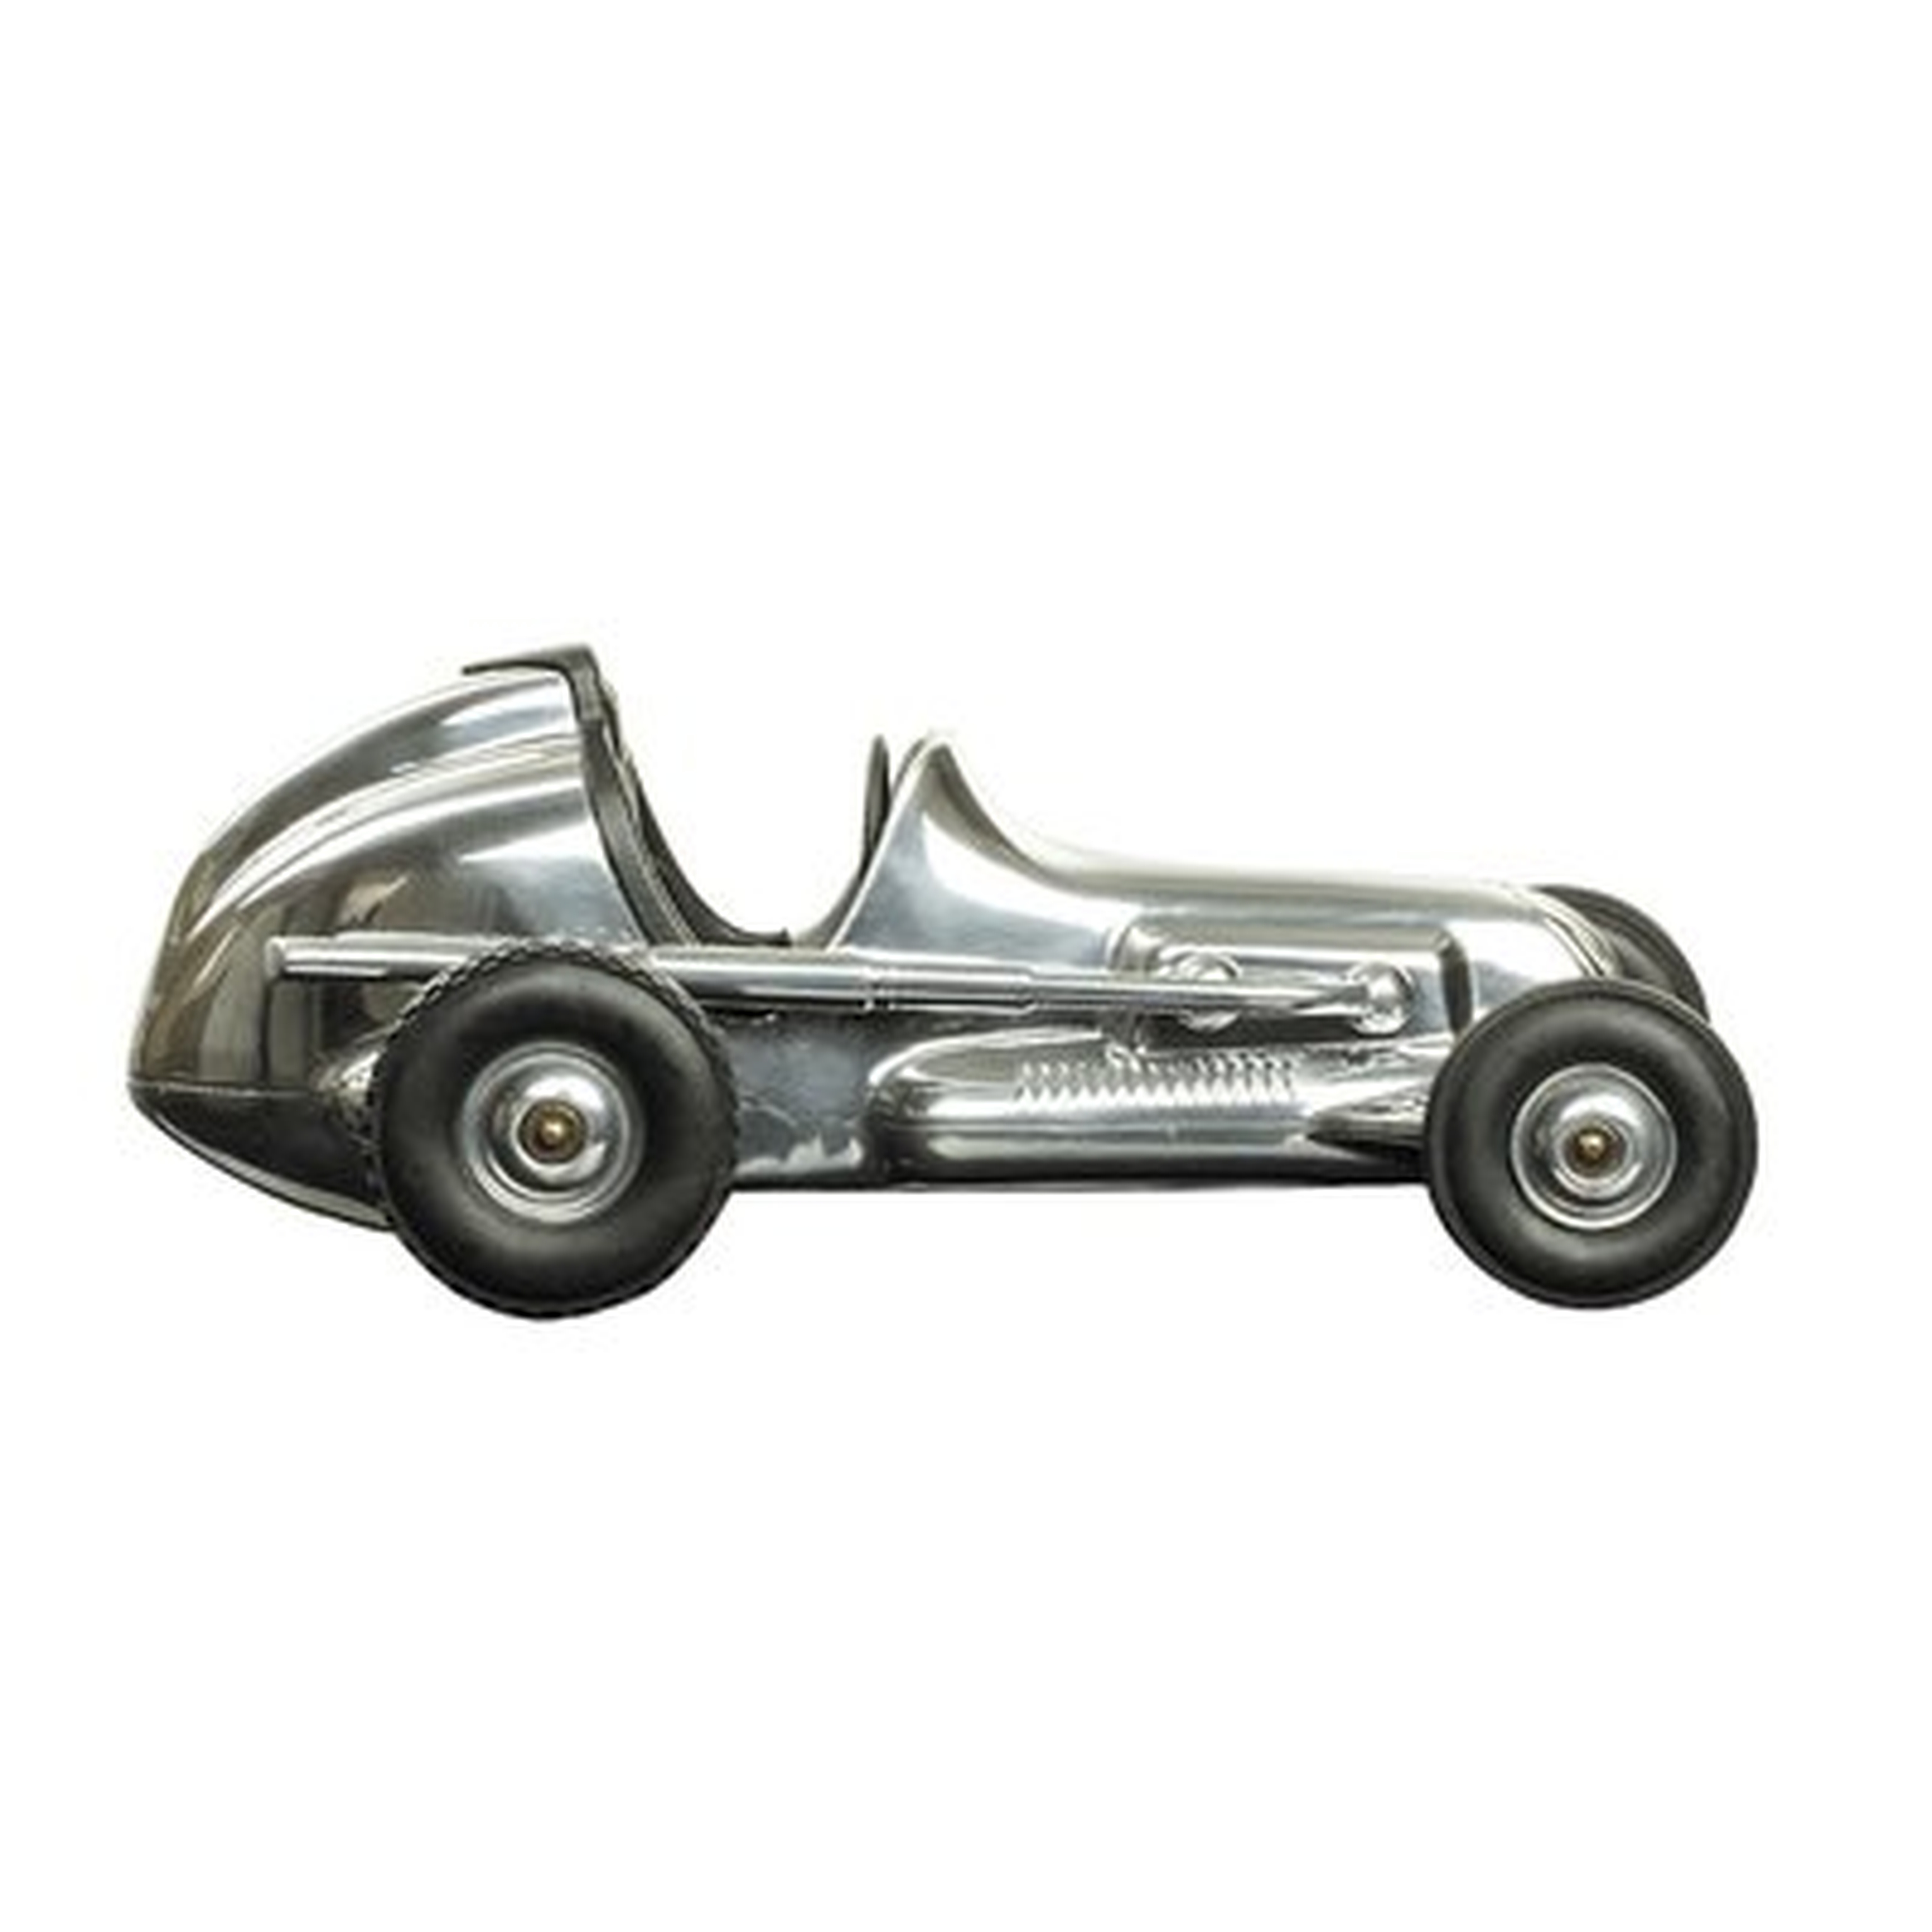 Kaczmarek Toy Speed Car Sculpture - Wayfair